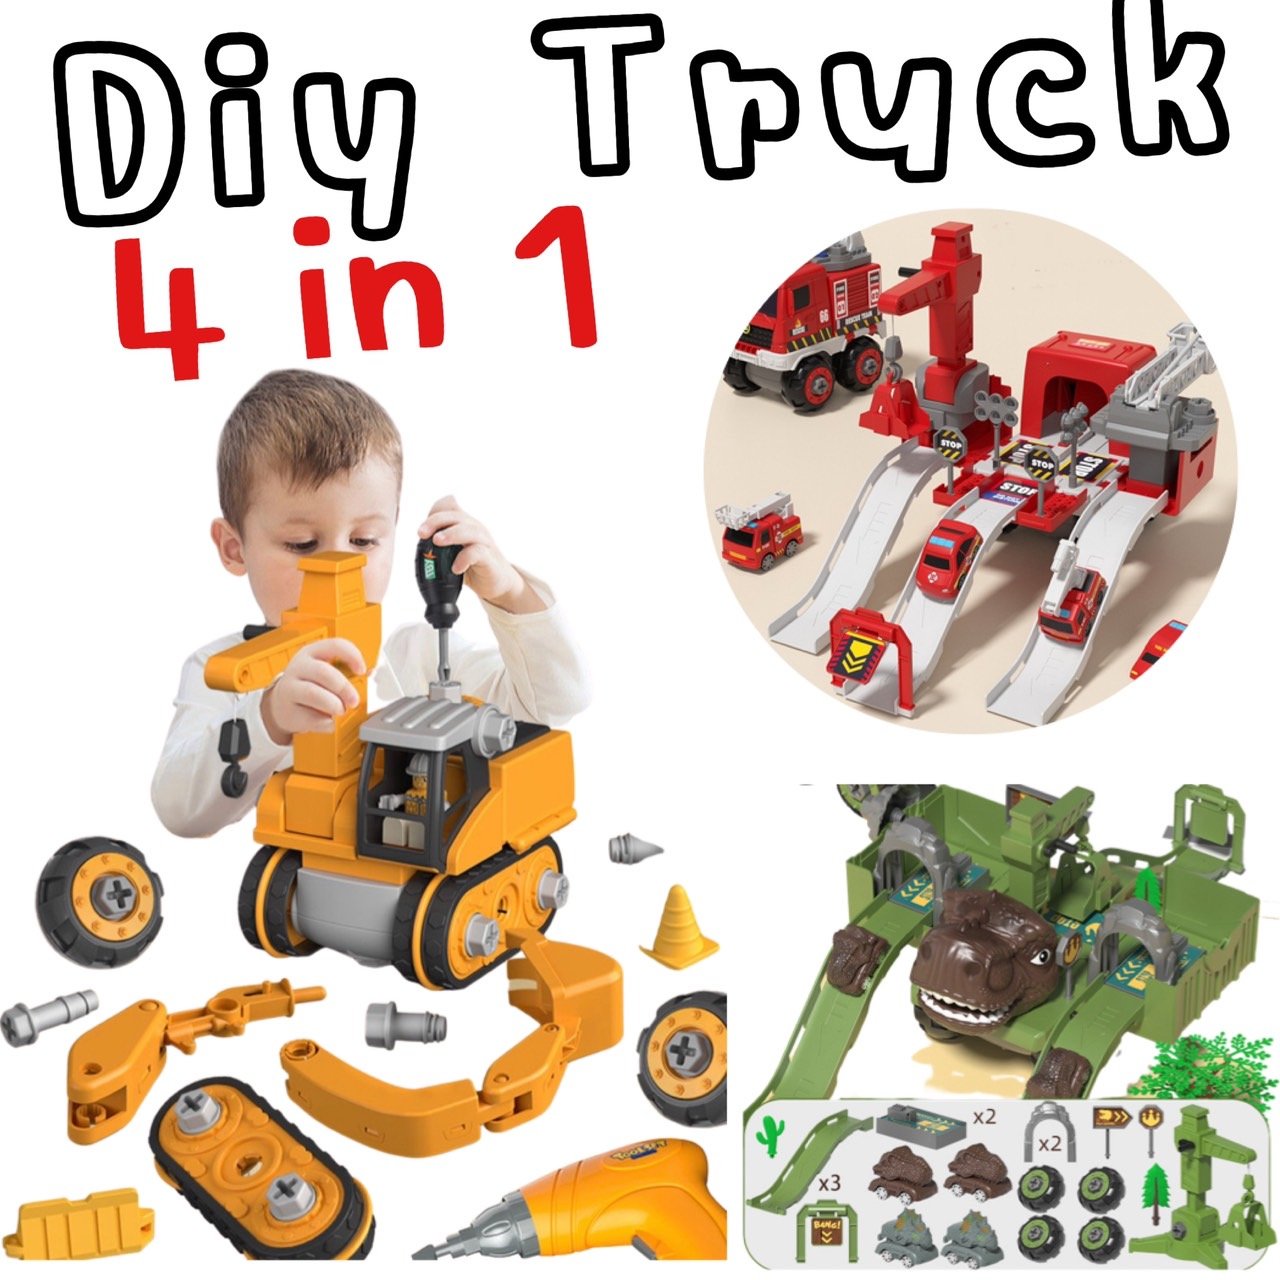 DIY TRUCK 4-in 1 (toy653)